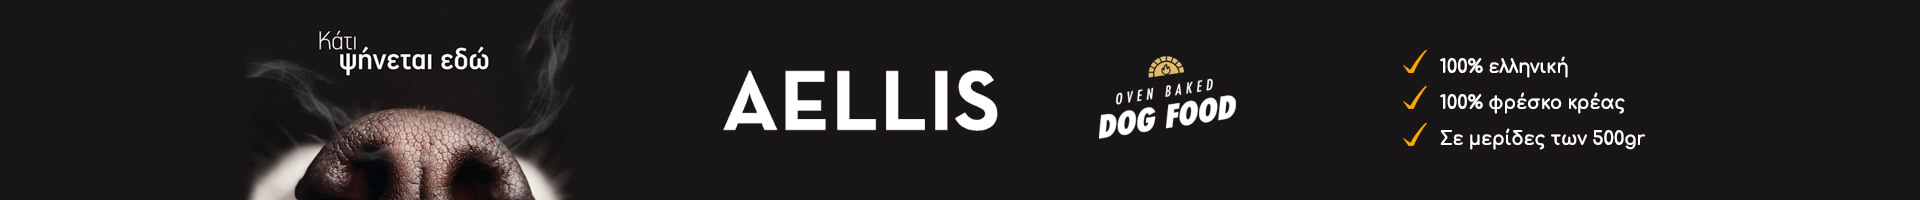 aellis-banner.jpg